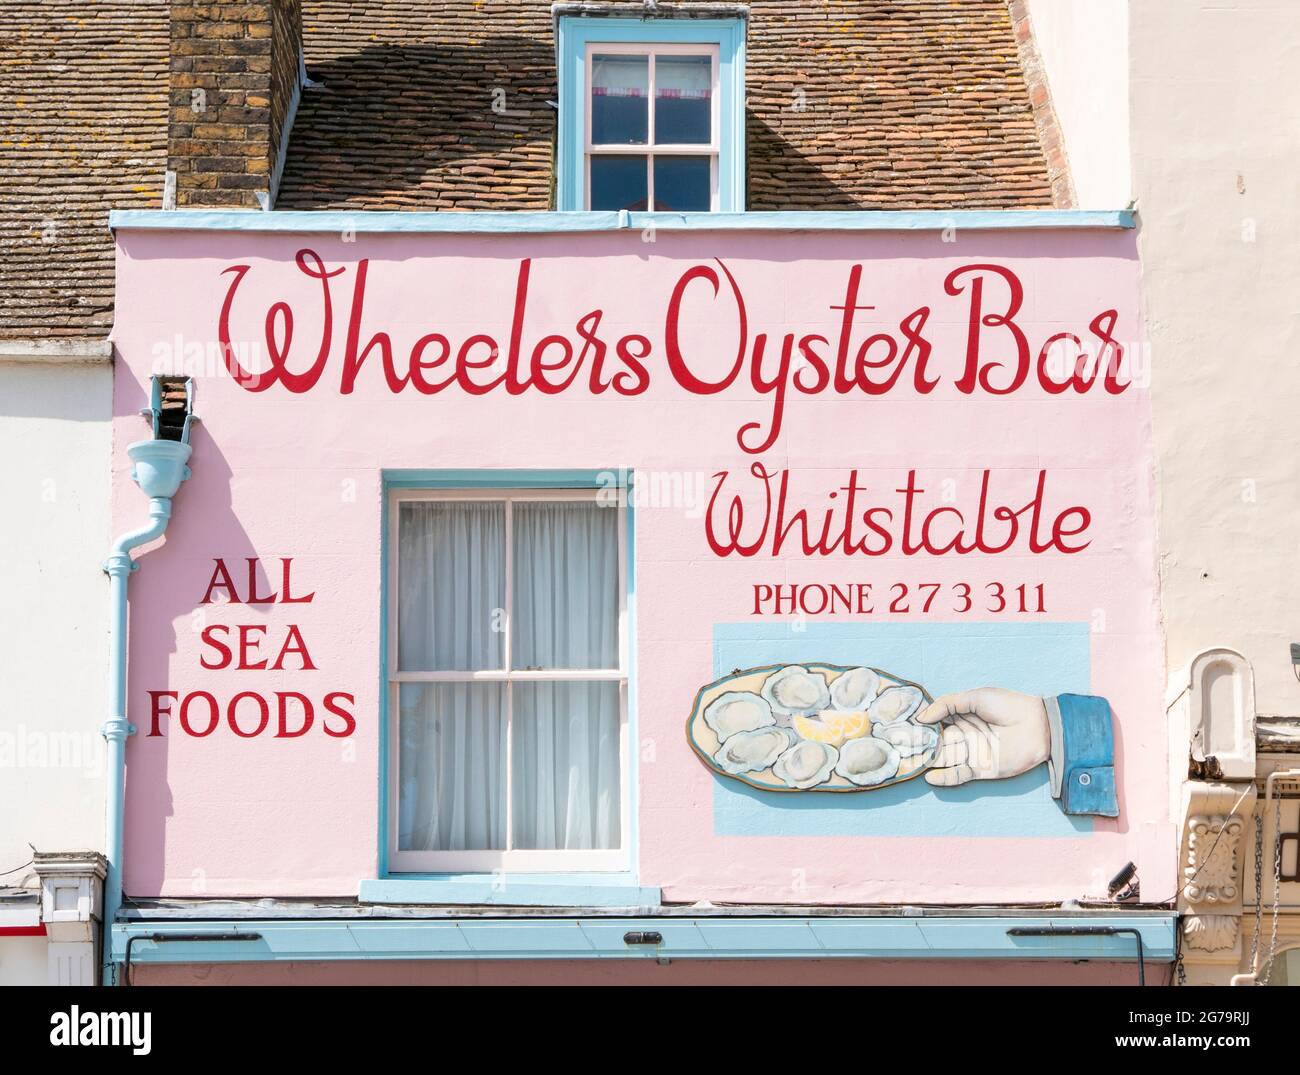 Wheelers Oyster Bar Whitstable High Street Whitstable Kent England GB Europa Stockfoto